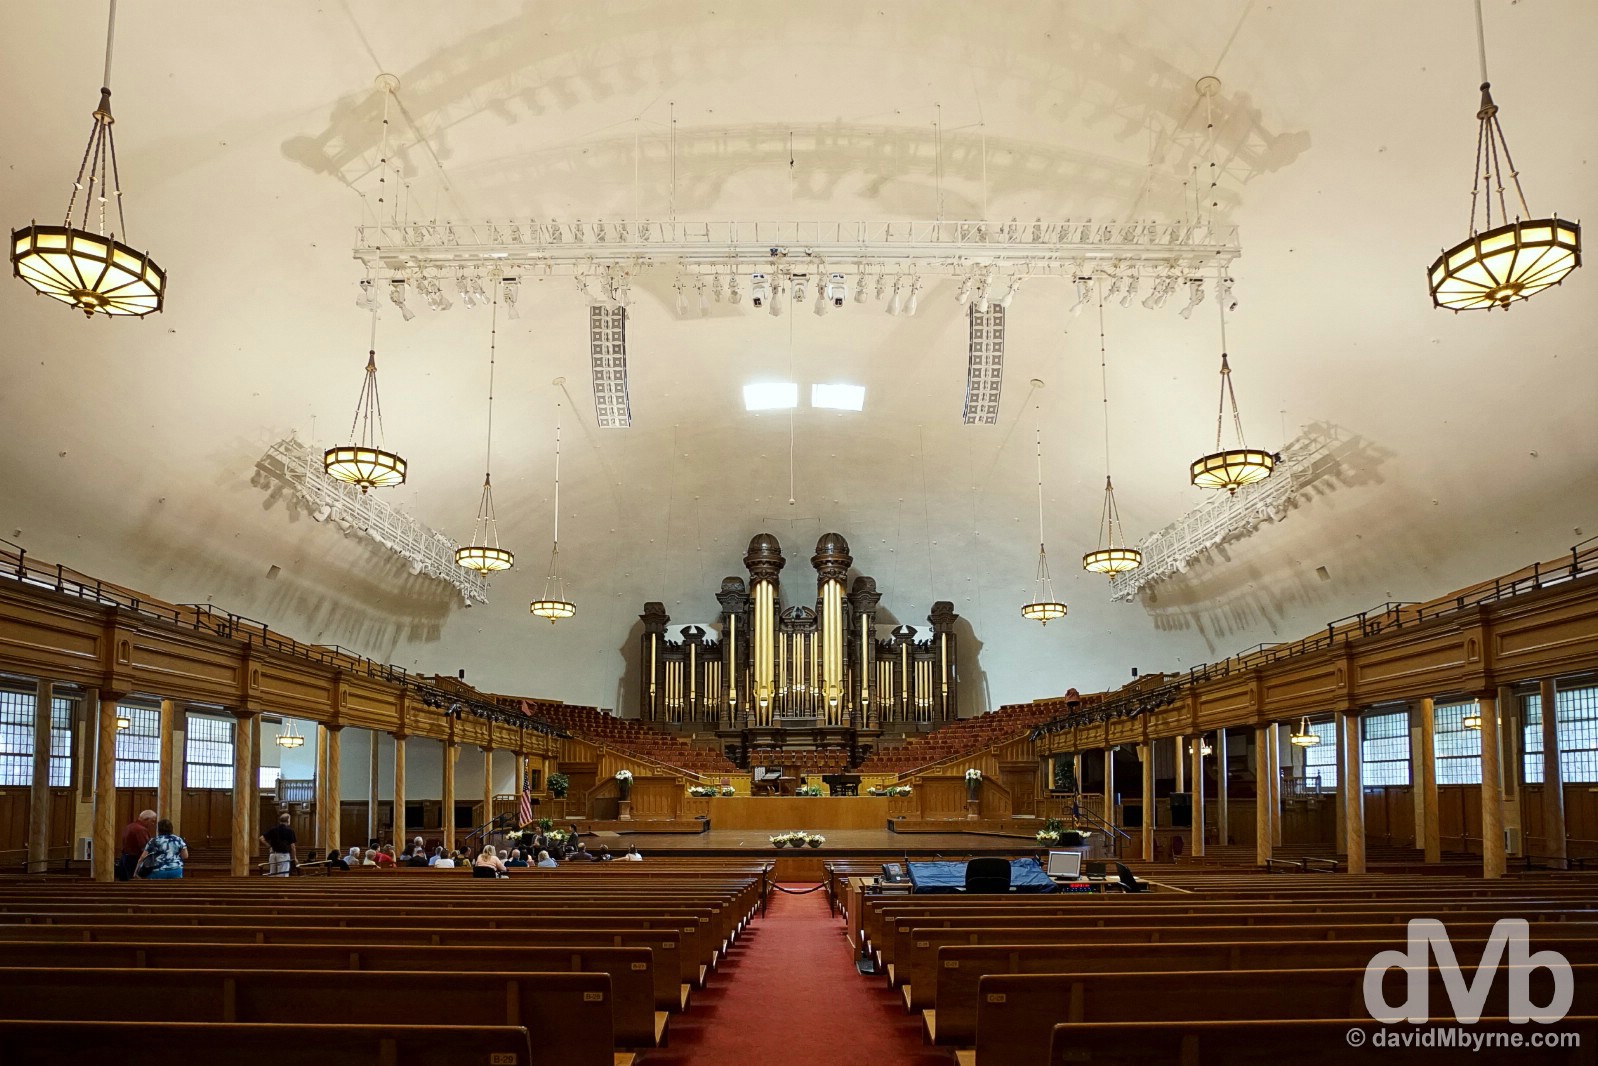 The interior of the Mormon Tabernacle in Temple Square, Salt Lake City, Utah, USA. September 7, 2016.